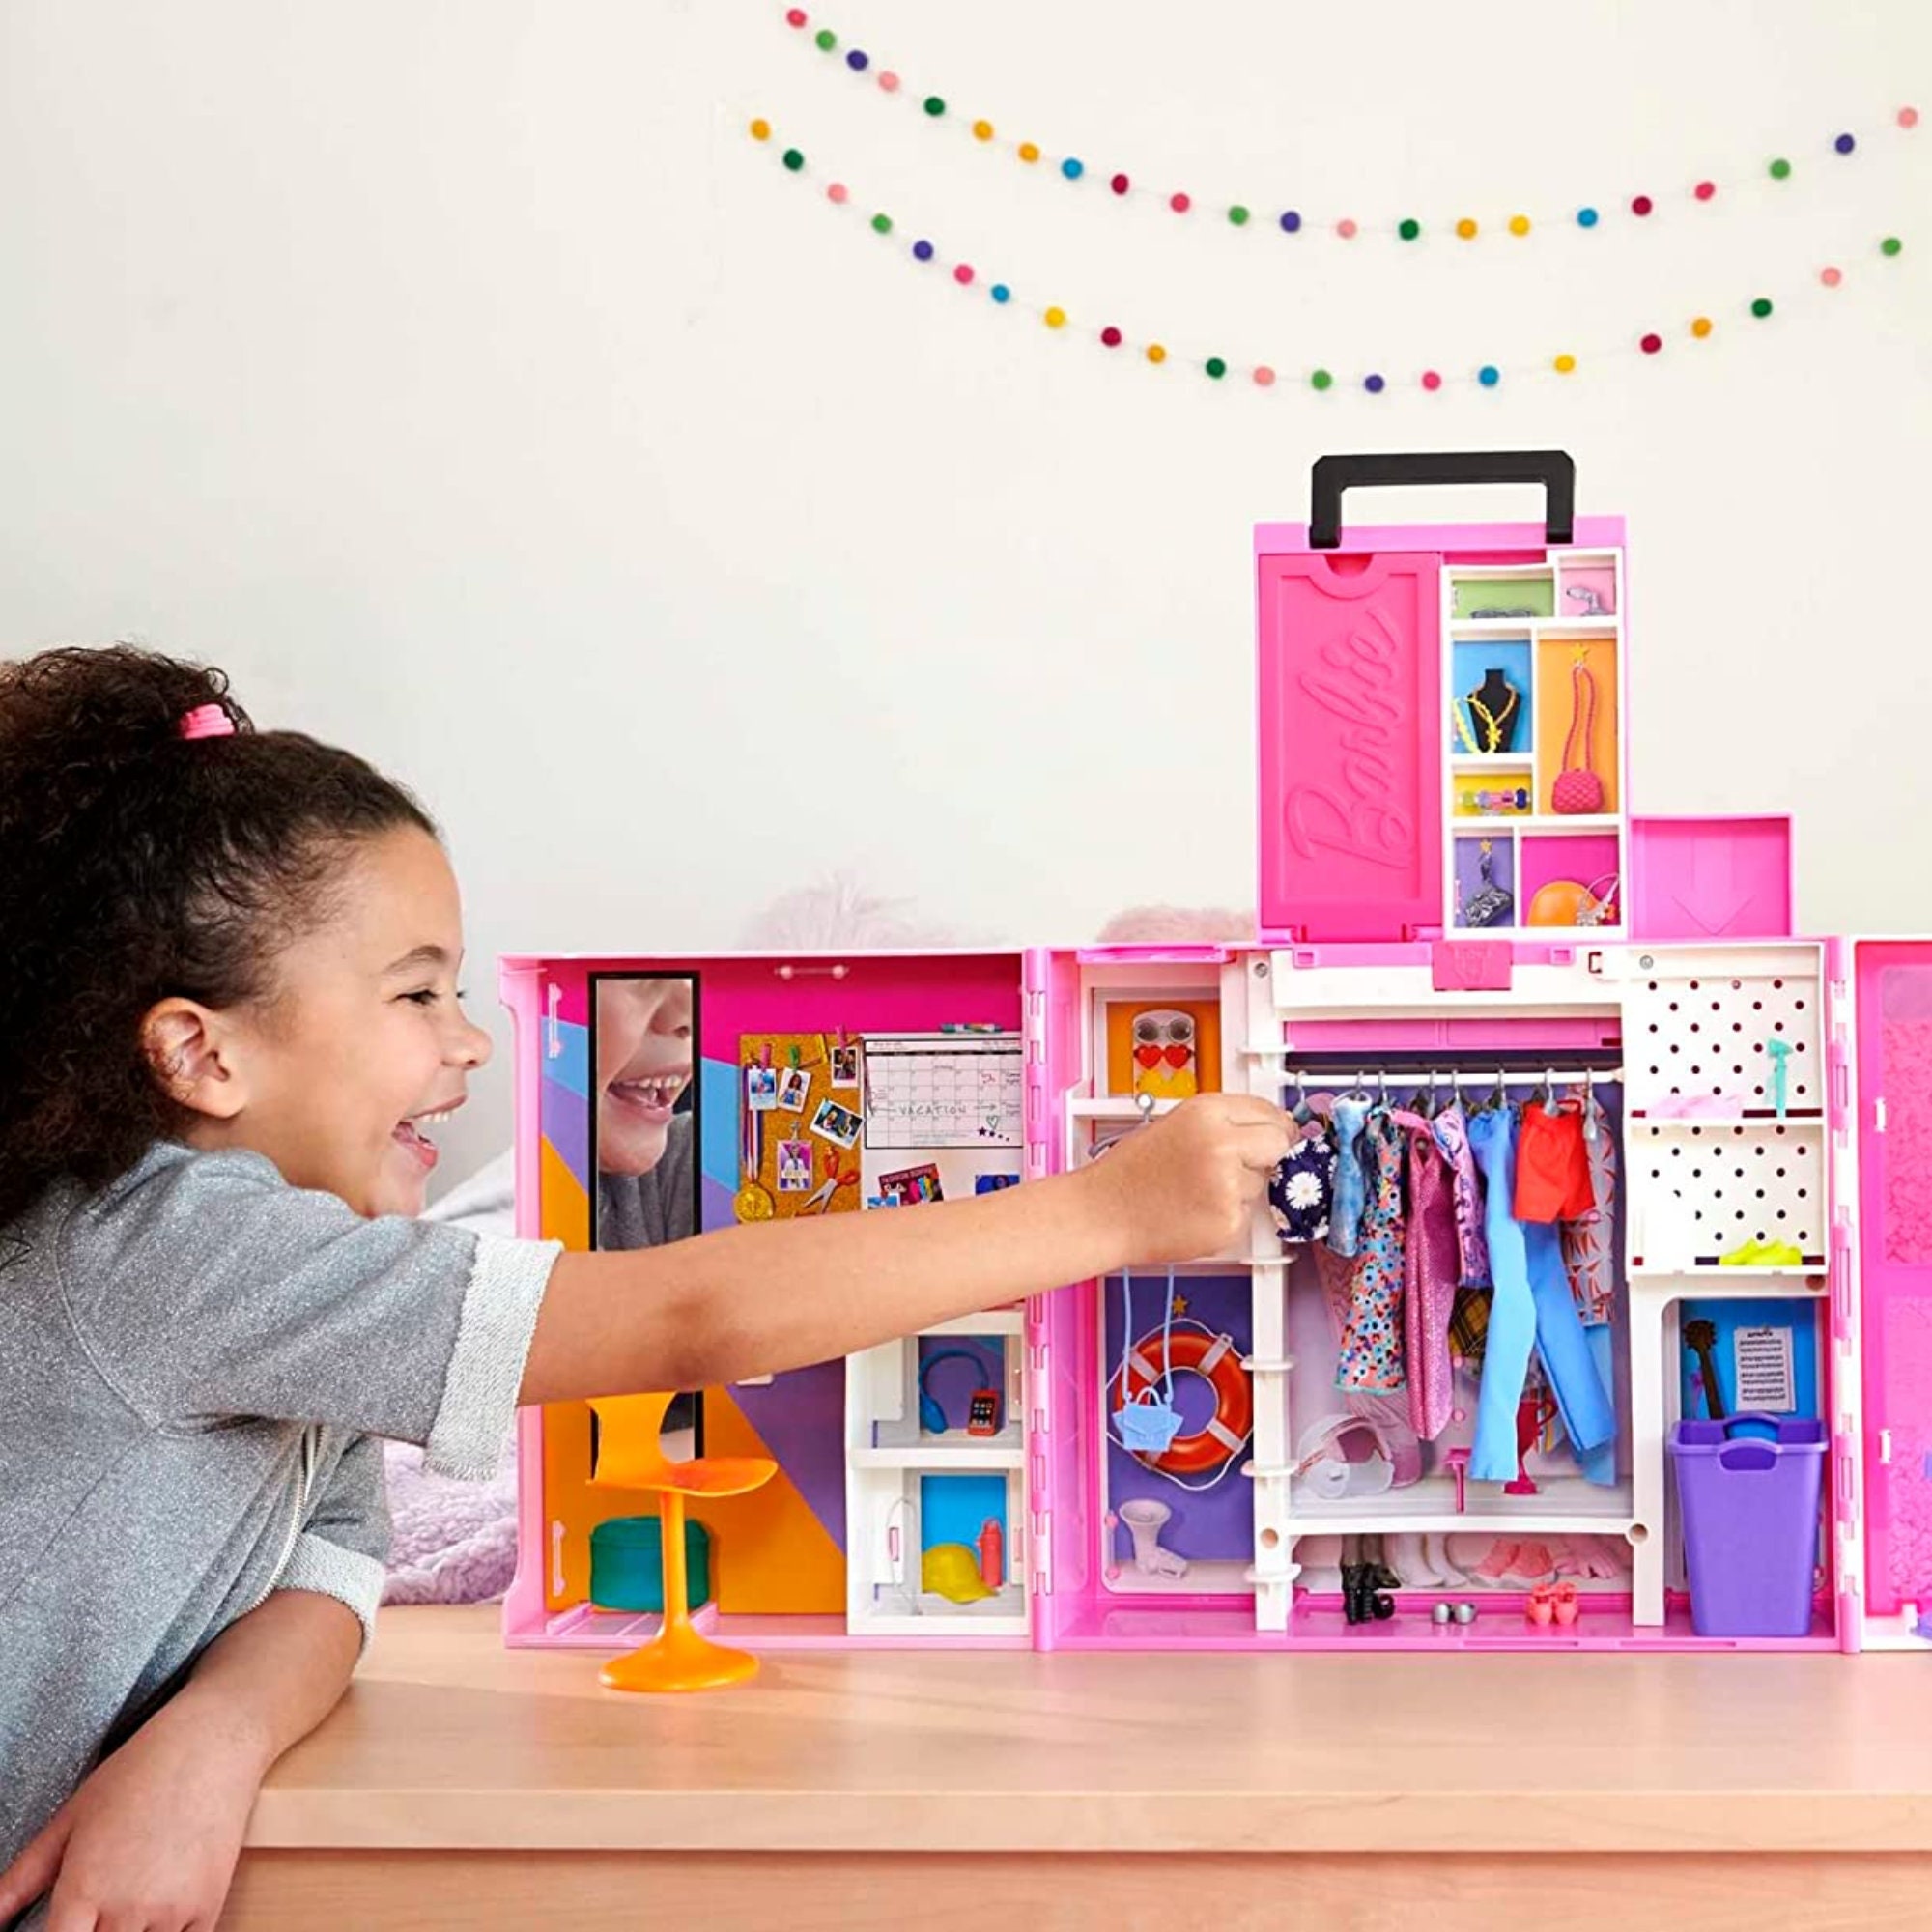 Barbie Closet Playset with 35+ Accessories 5 Pop-Up 2nd Level,Dream Closet